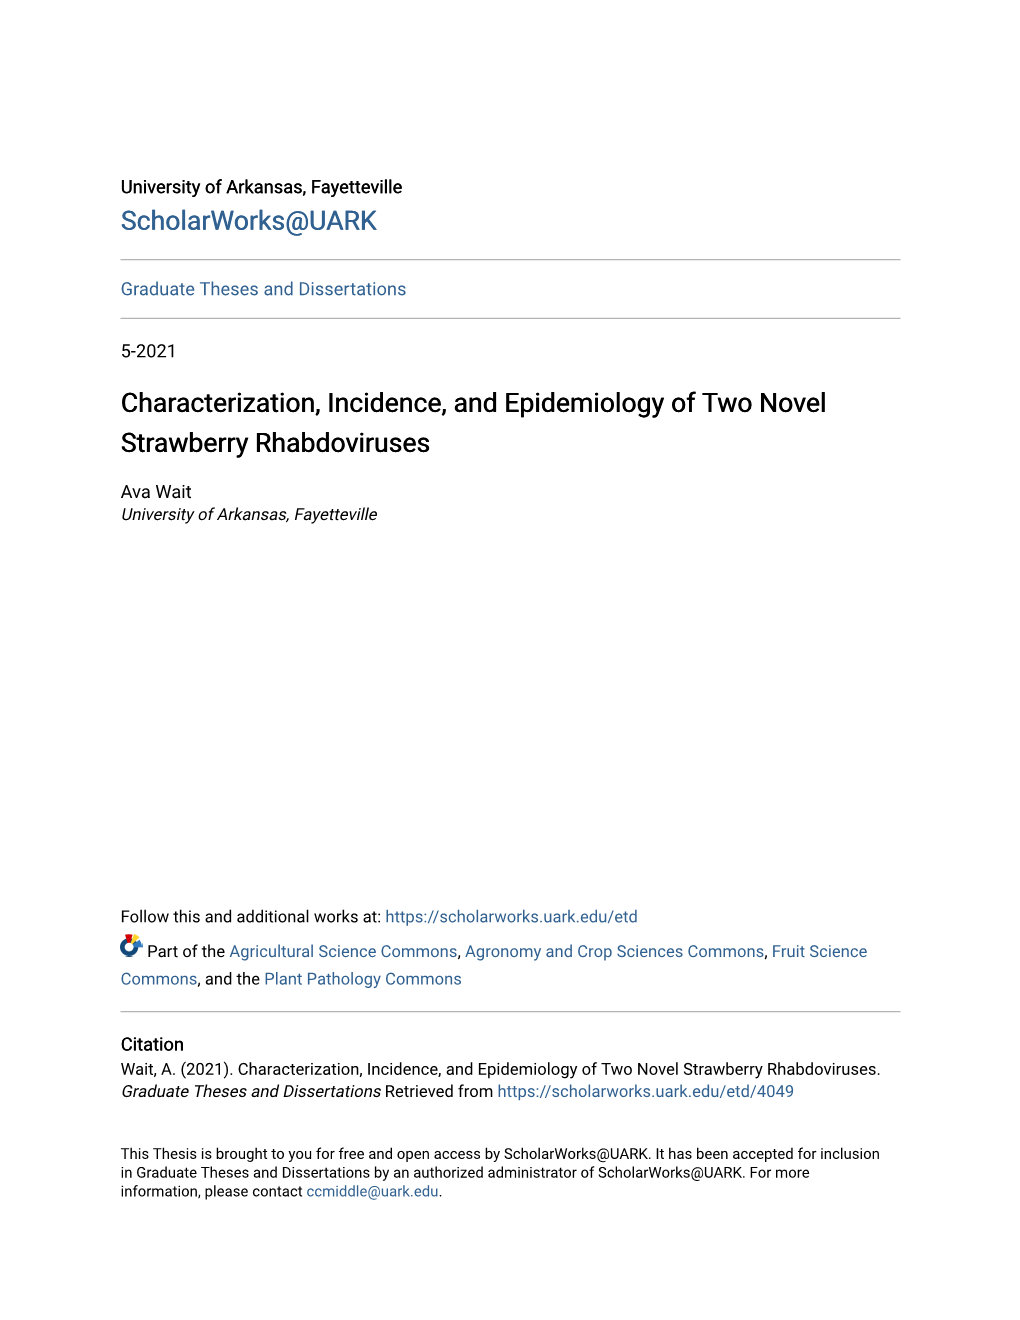 Characterization, Incidence, and Epidemiology of Two Novel Strawberry Rhabdoviruses